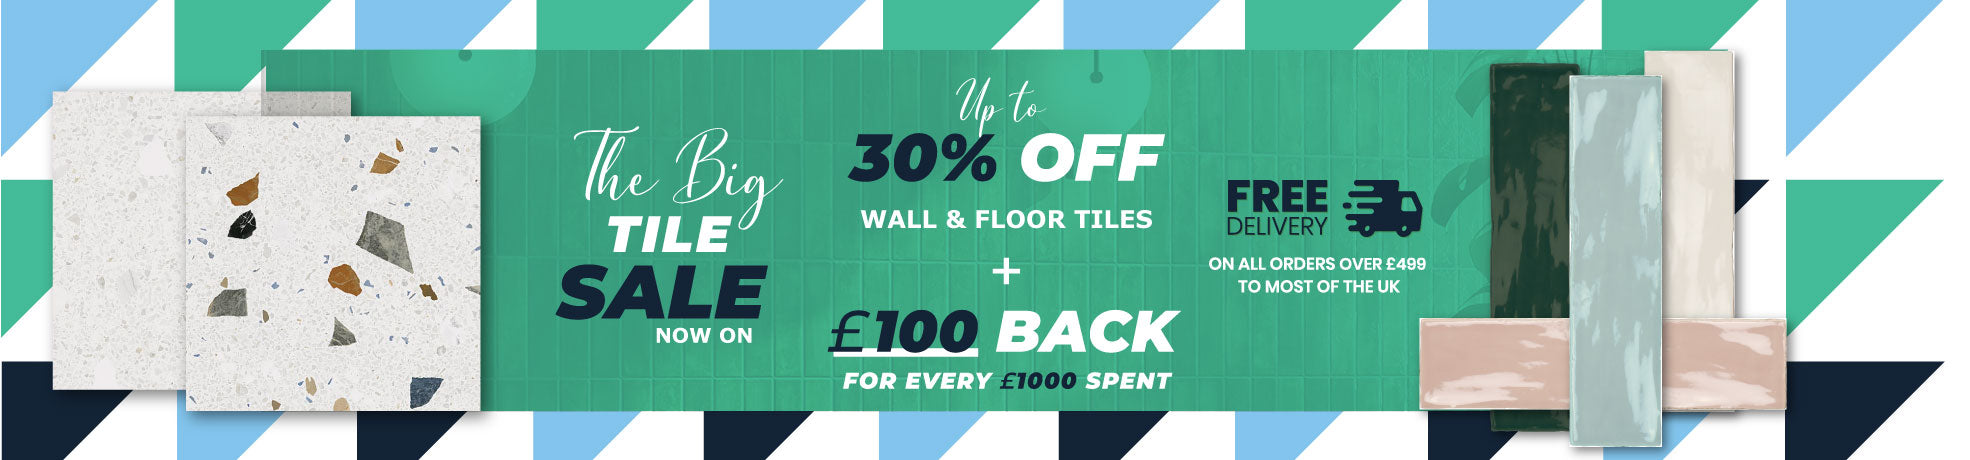 Get up to 30% Off Wall & Floor Tiles banner